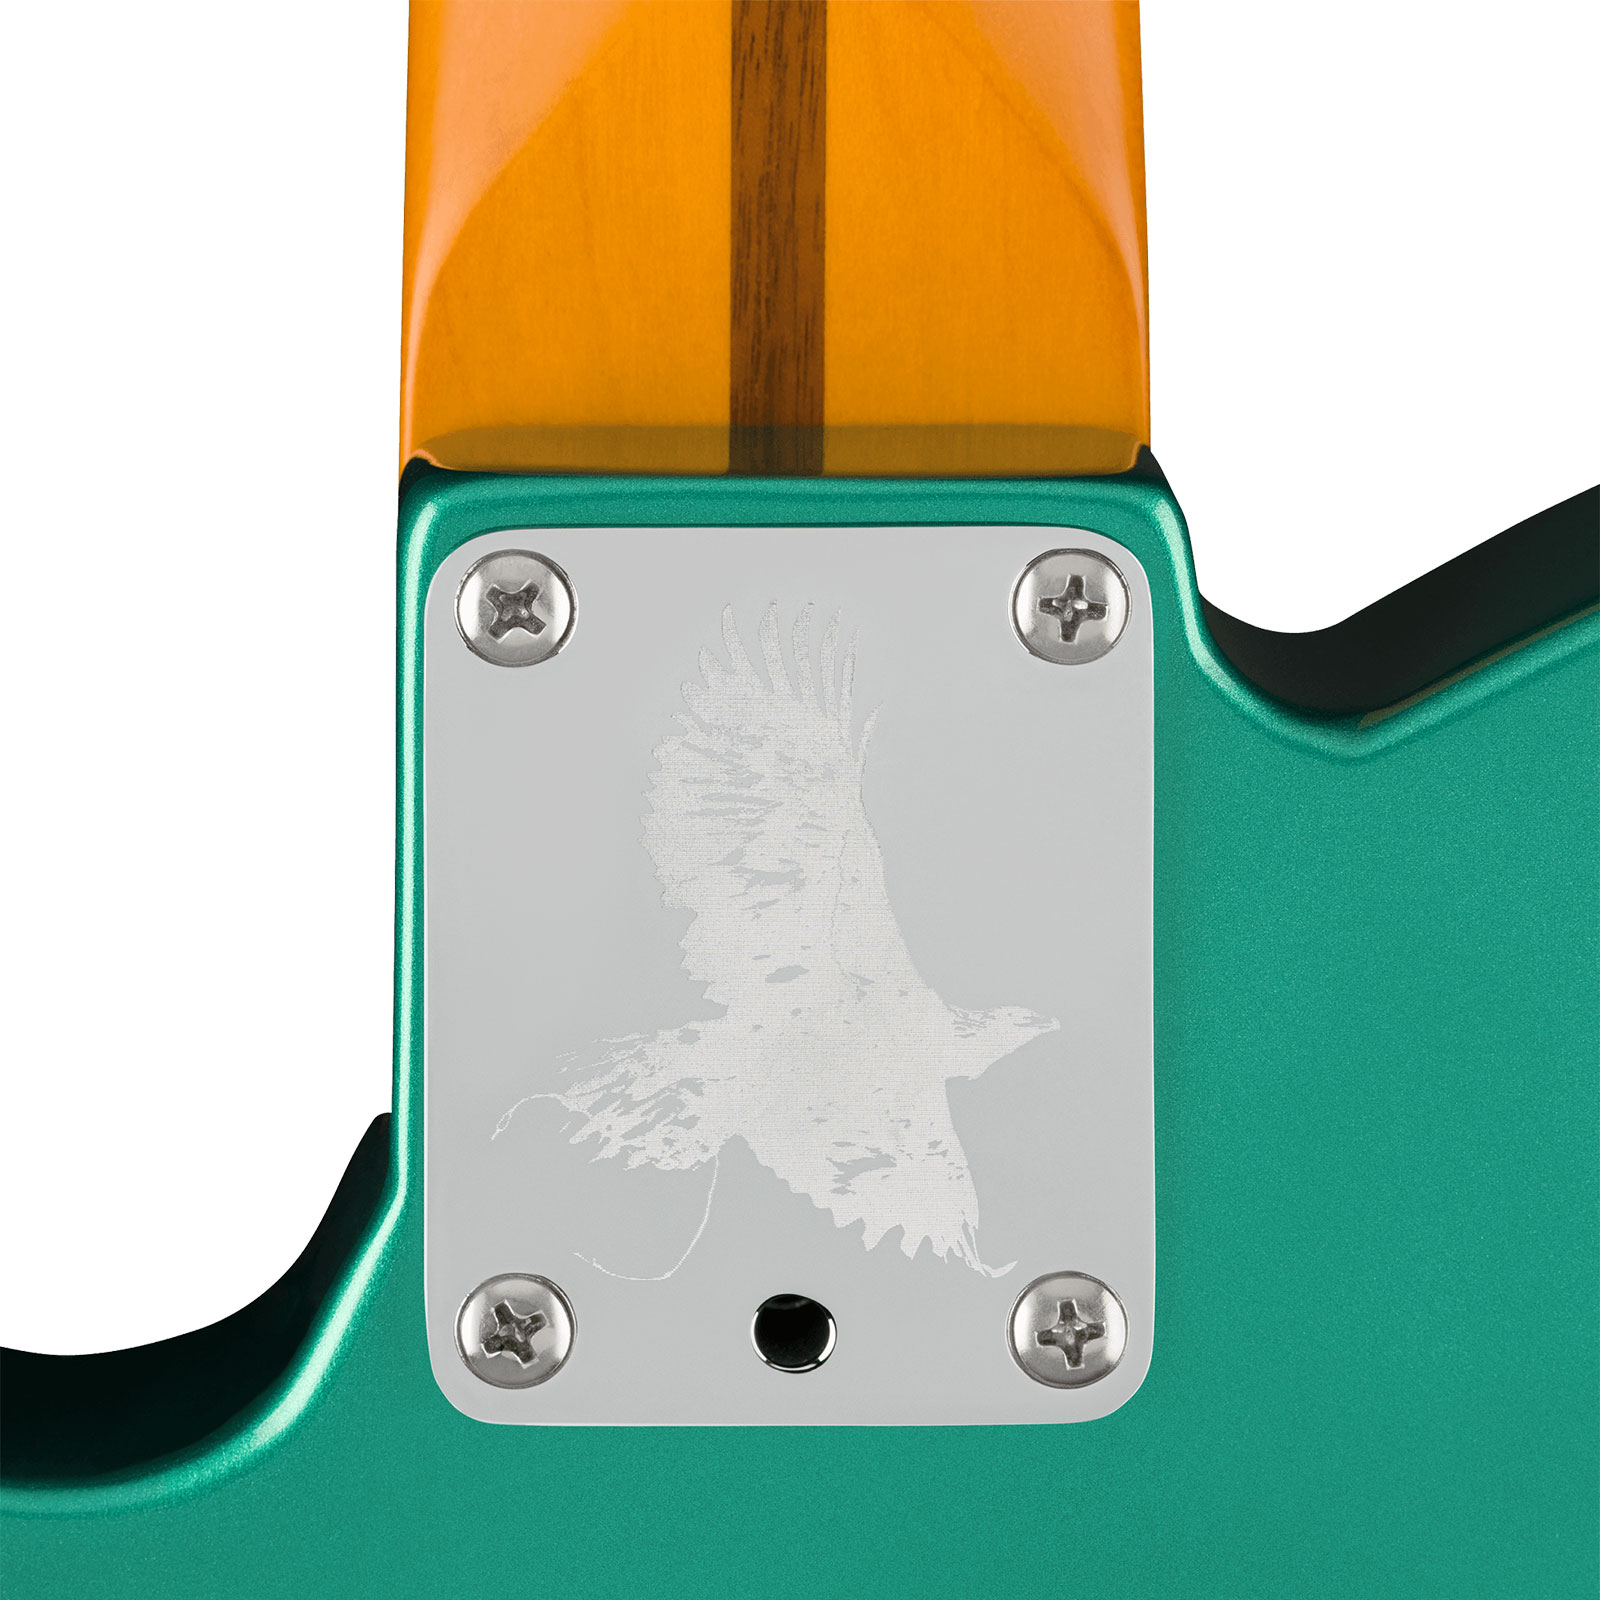 Fender Susan Tedeschi Tele Usa Signature 2s Ht Rw - Aged Caribbean Mist - Televorm elektrische gitaar - Variation 3